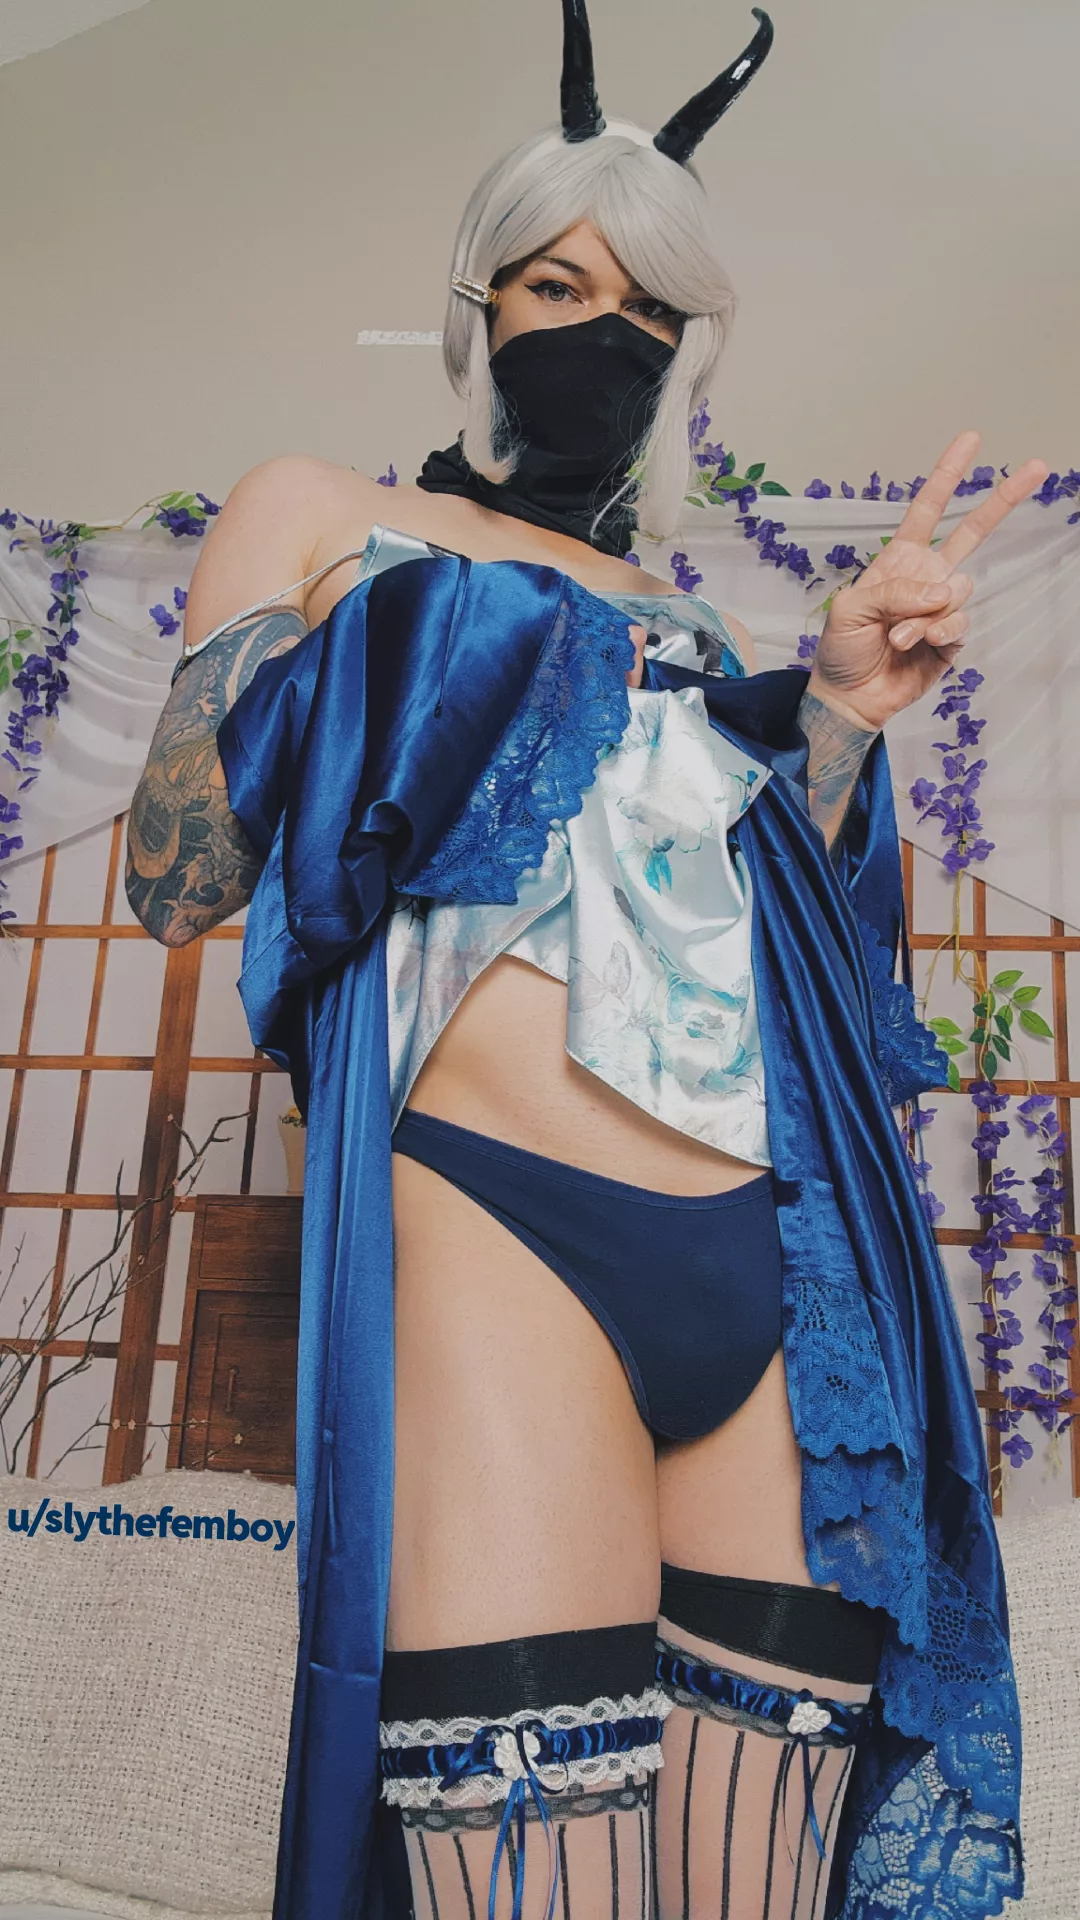 Blue Demon Porn - Blue demon girl nudes by Slythefemboy